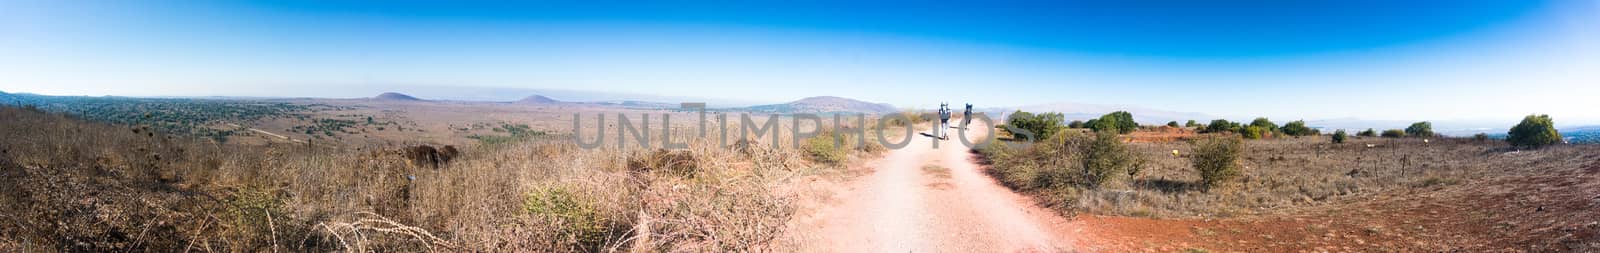 Hiking in Golan heights of Israel panorama by javax